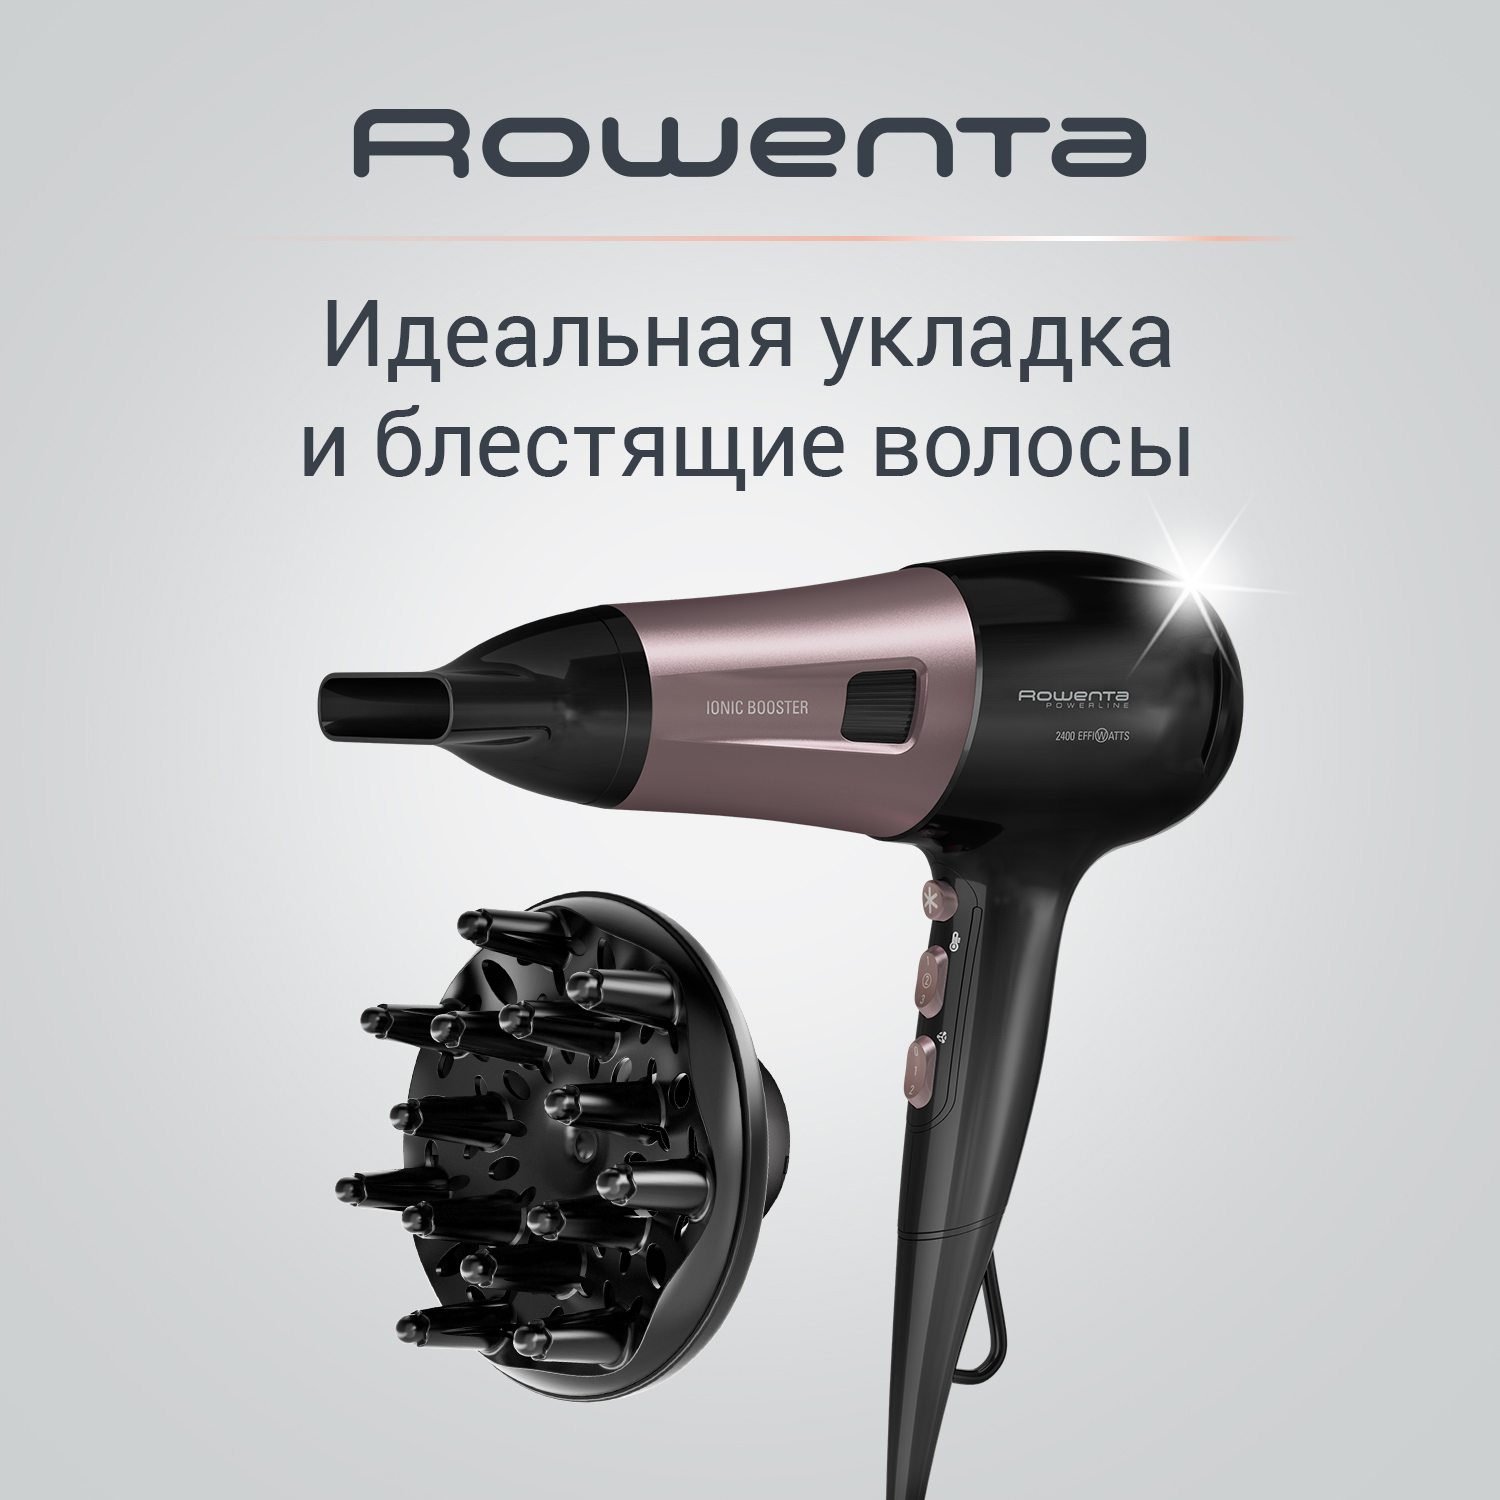 Фен Rowenta CV5940F0 2400 Вт черный, розовый фен powerline cv5940f0